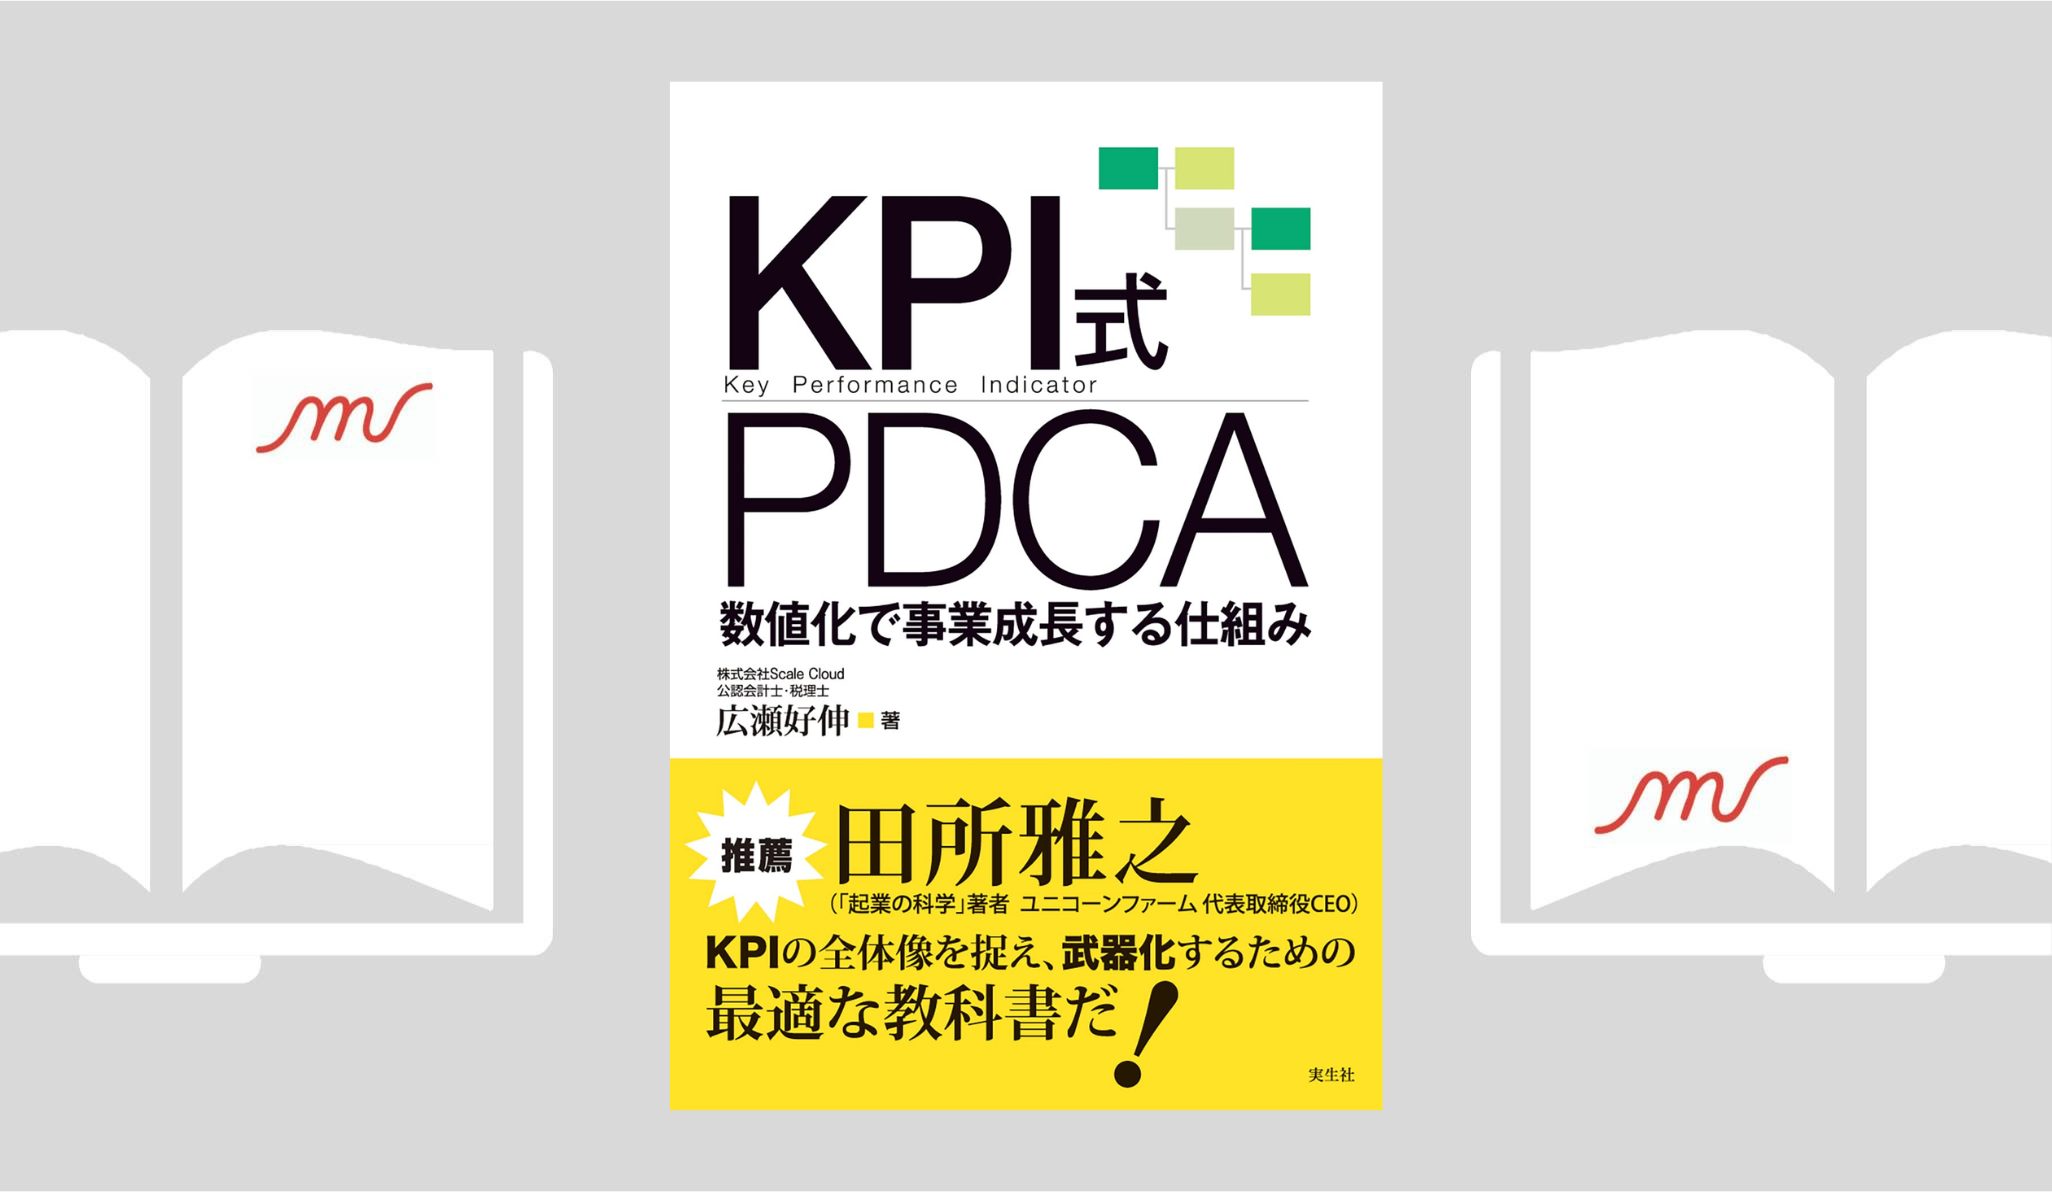 『KPI式PDCA: 数値化で事業成長する仕組み』広瀬 好伸